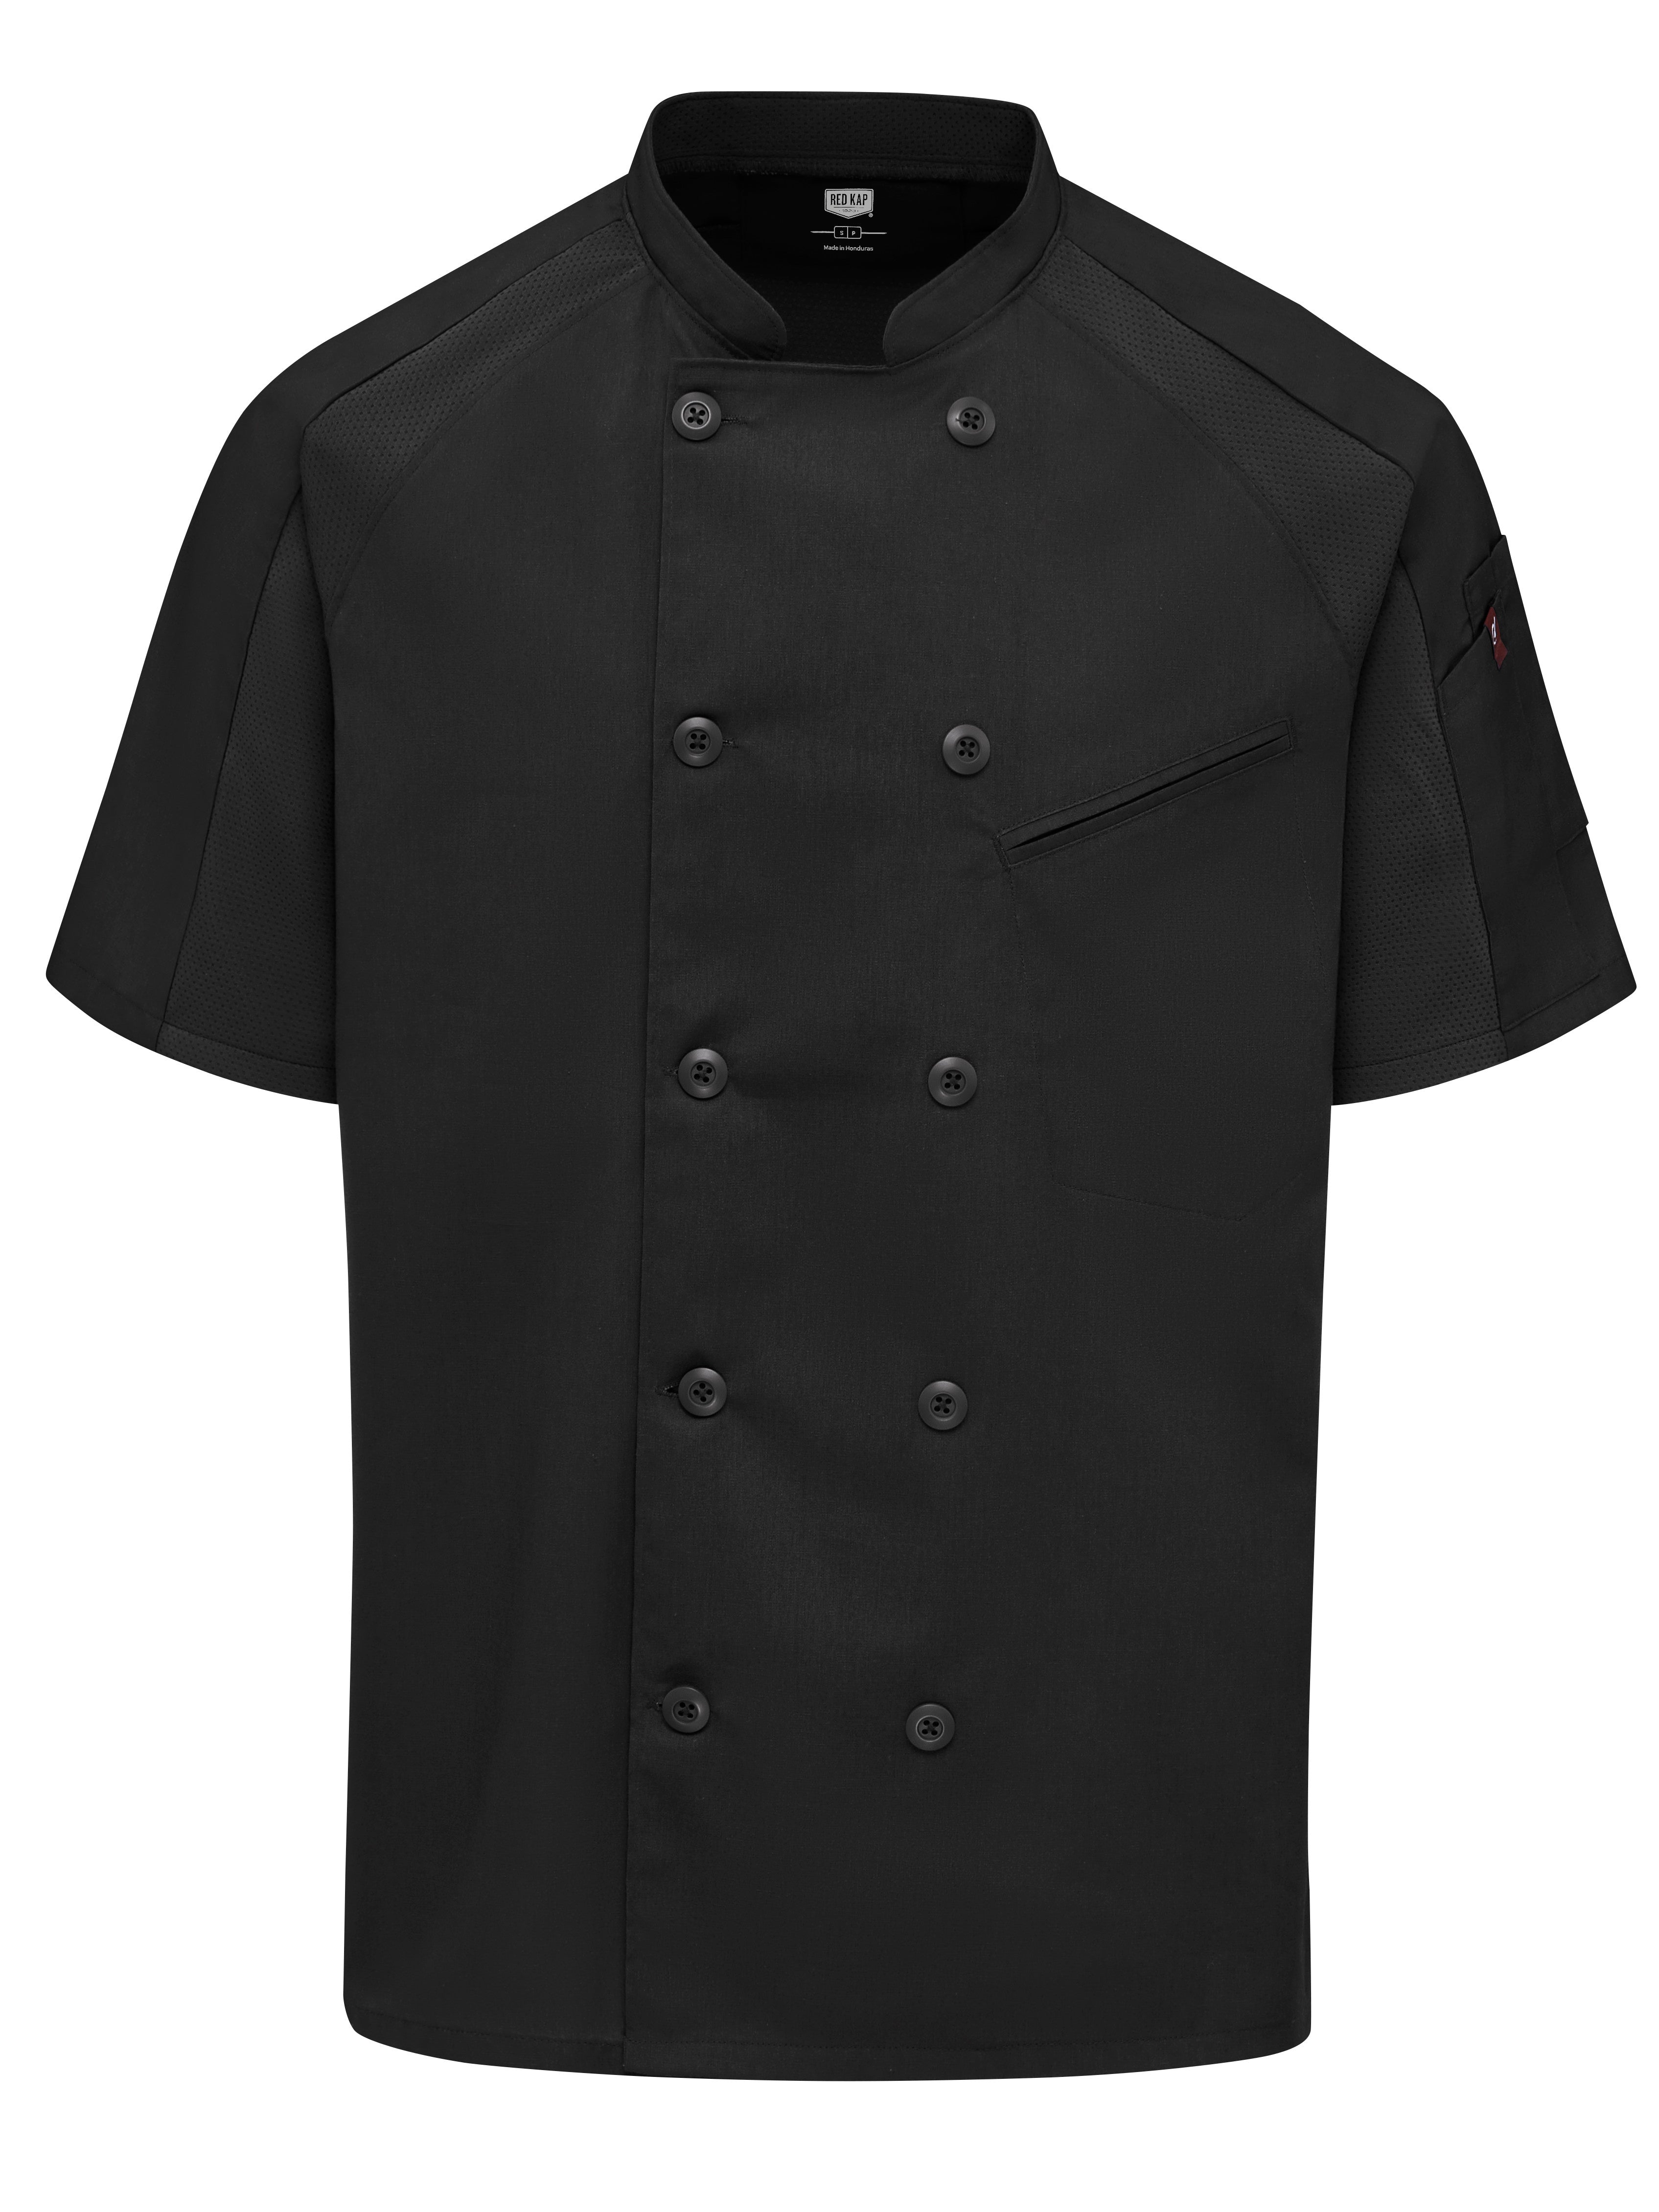 Red Kap Men's Airflow Raglan Chef Coat with OilBlok